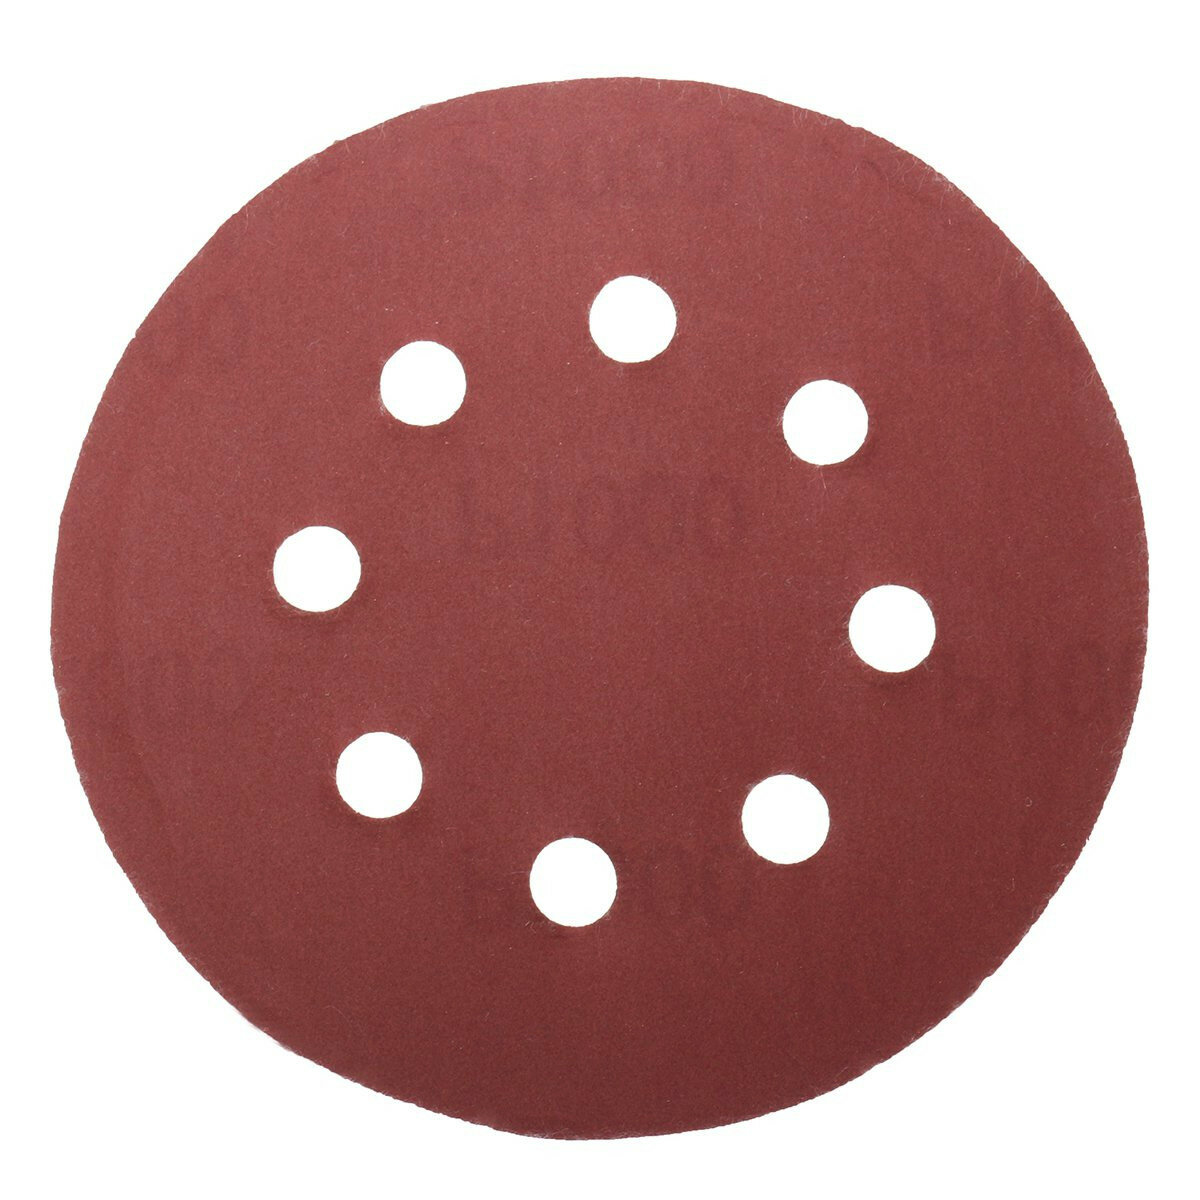 

25pcs 5 Inch 8 Holes Sandpaper Abrasive Sanding Discs 600/1000/1200/1500/2000 Grit Sanding Paper